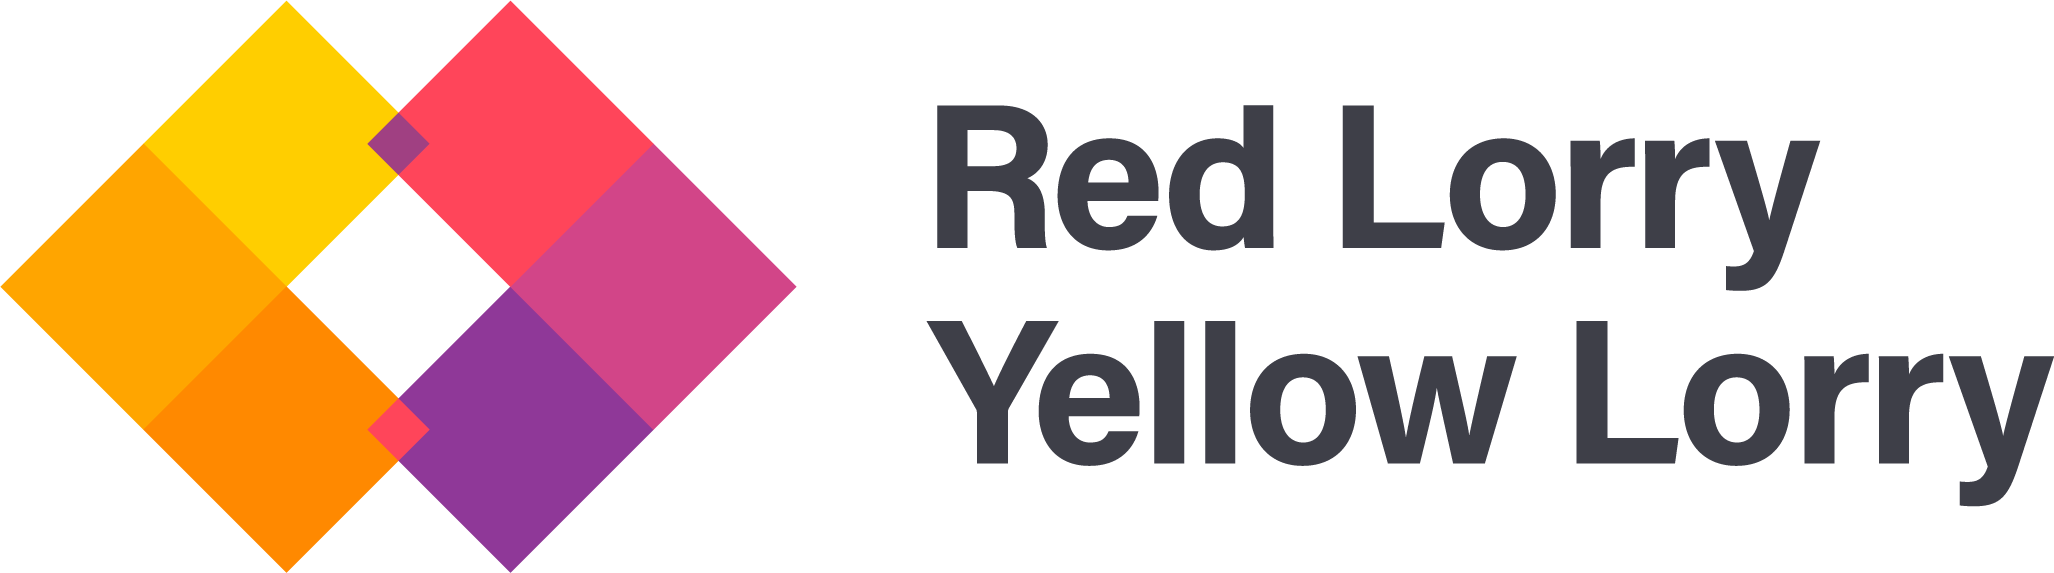 Red Yellow Logo - B2B Technology PR Agency. Comms. Tech PR. Red Lorry Yellow Lorry